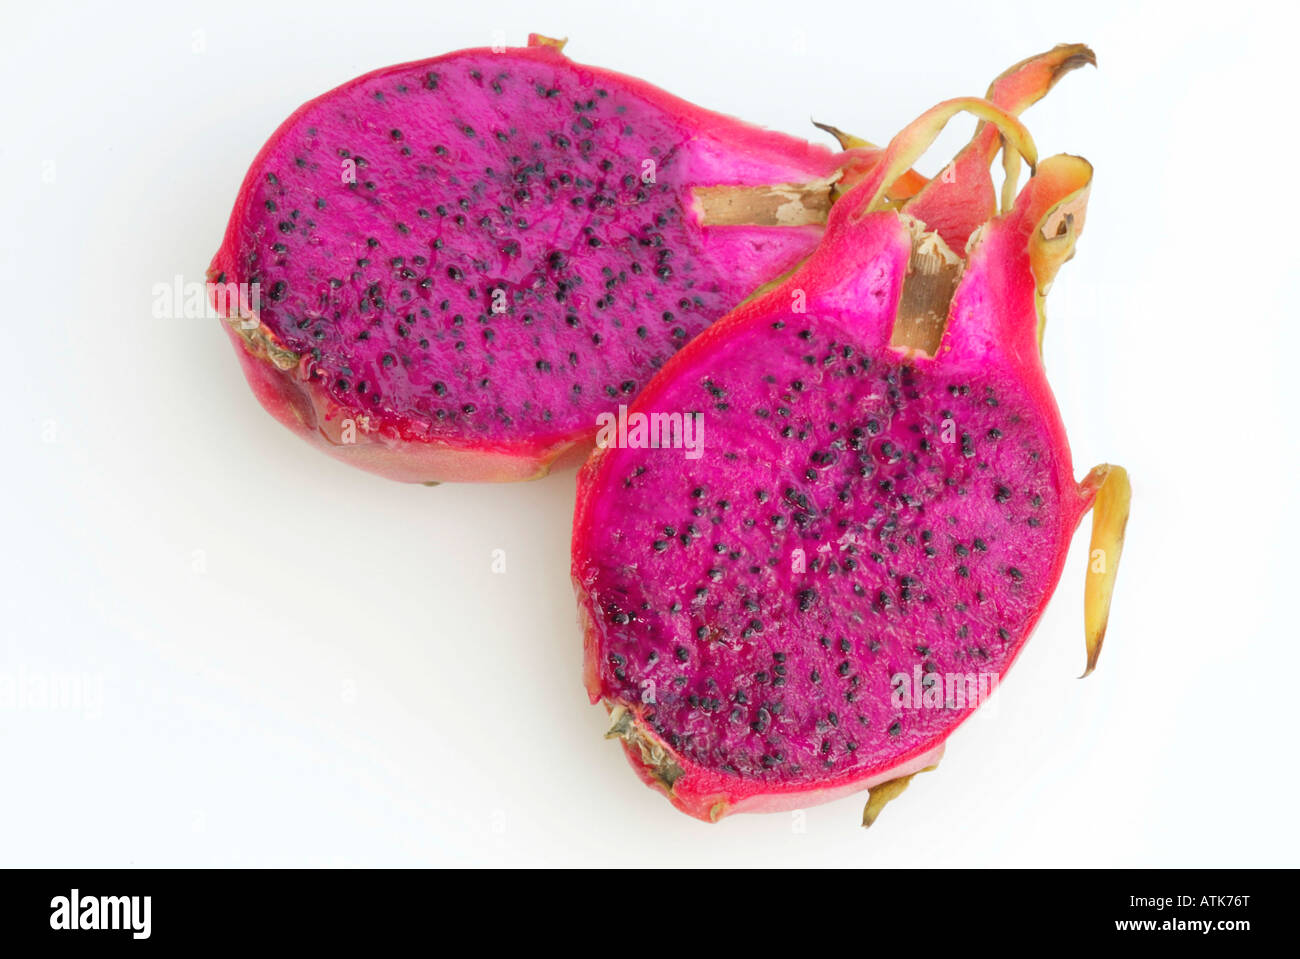 Dragonfruit / Pitahaya / Kaktusfrucht Stock Photo